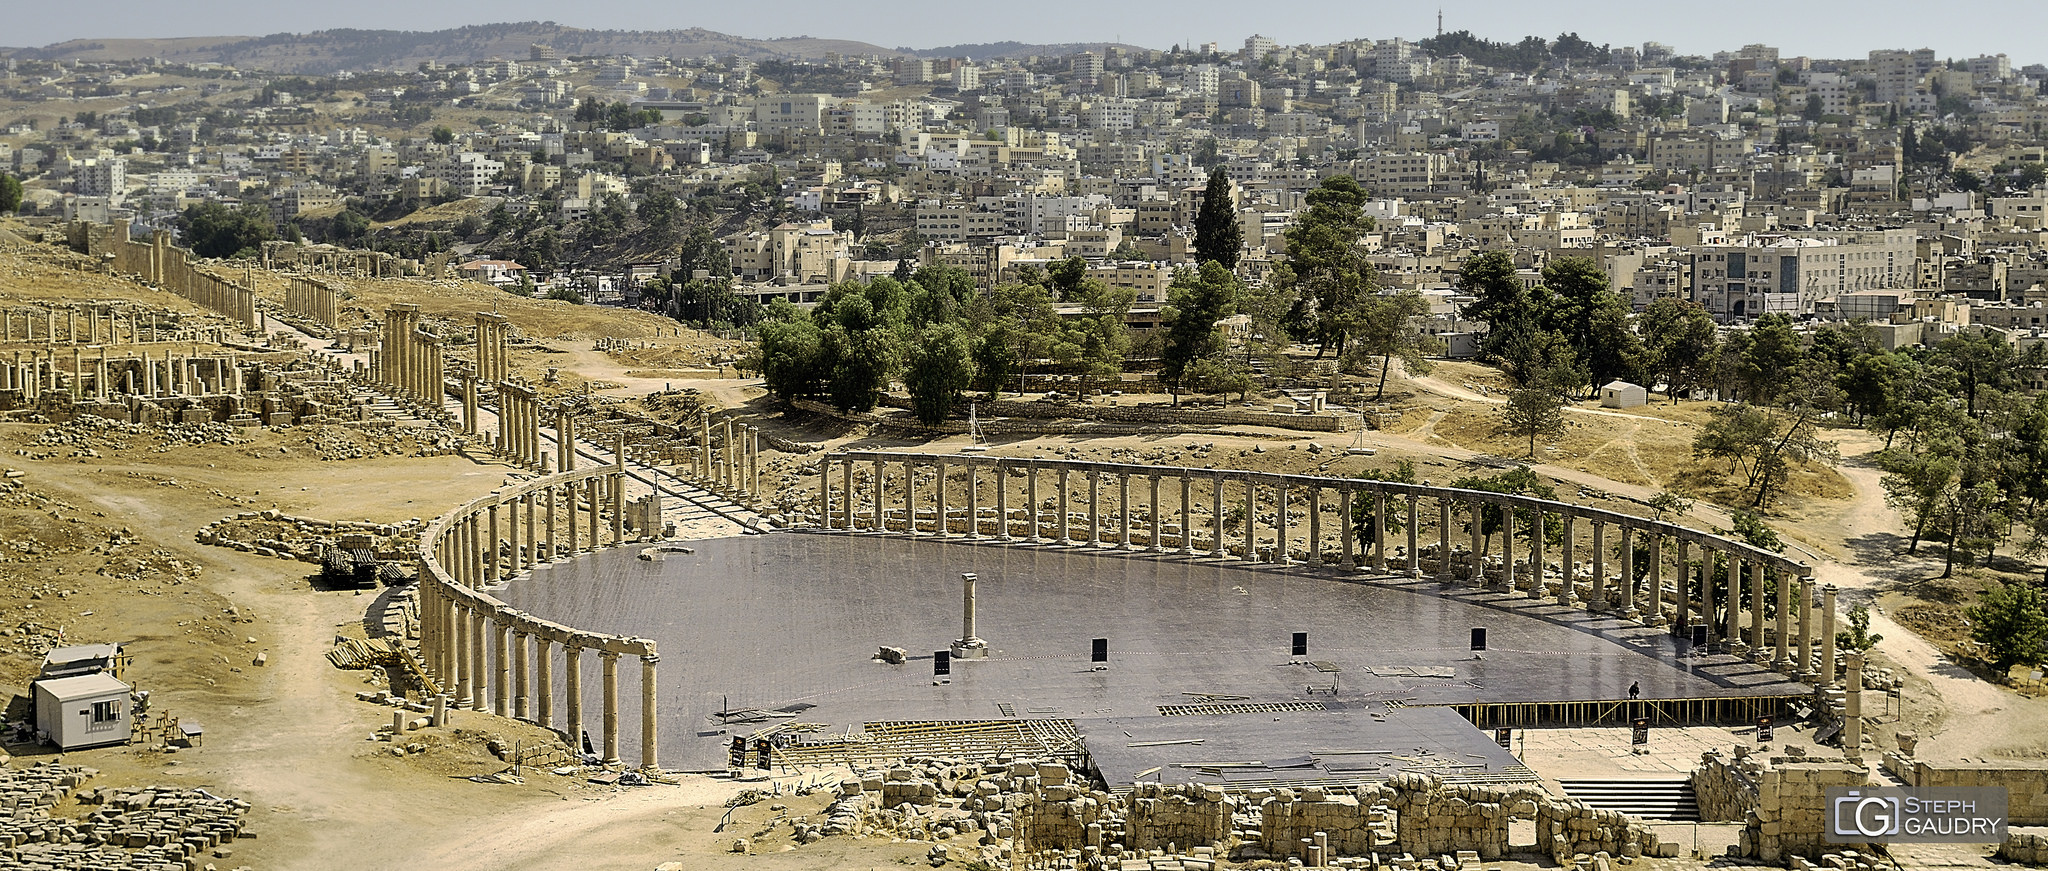 Jerash - Le forum ovale et le Cardo Maximus [Klik om de diavoorstelling te starten]